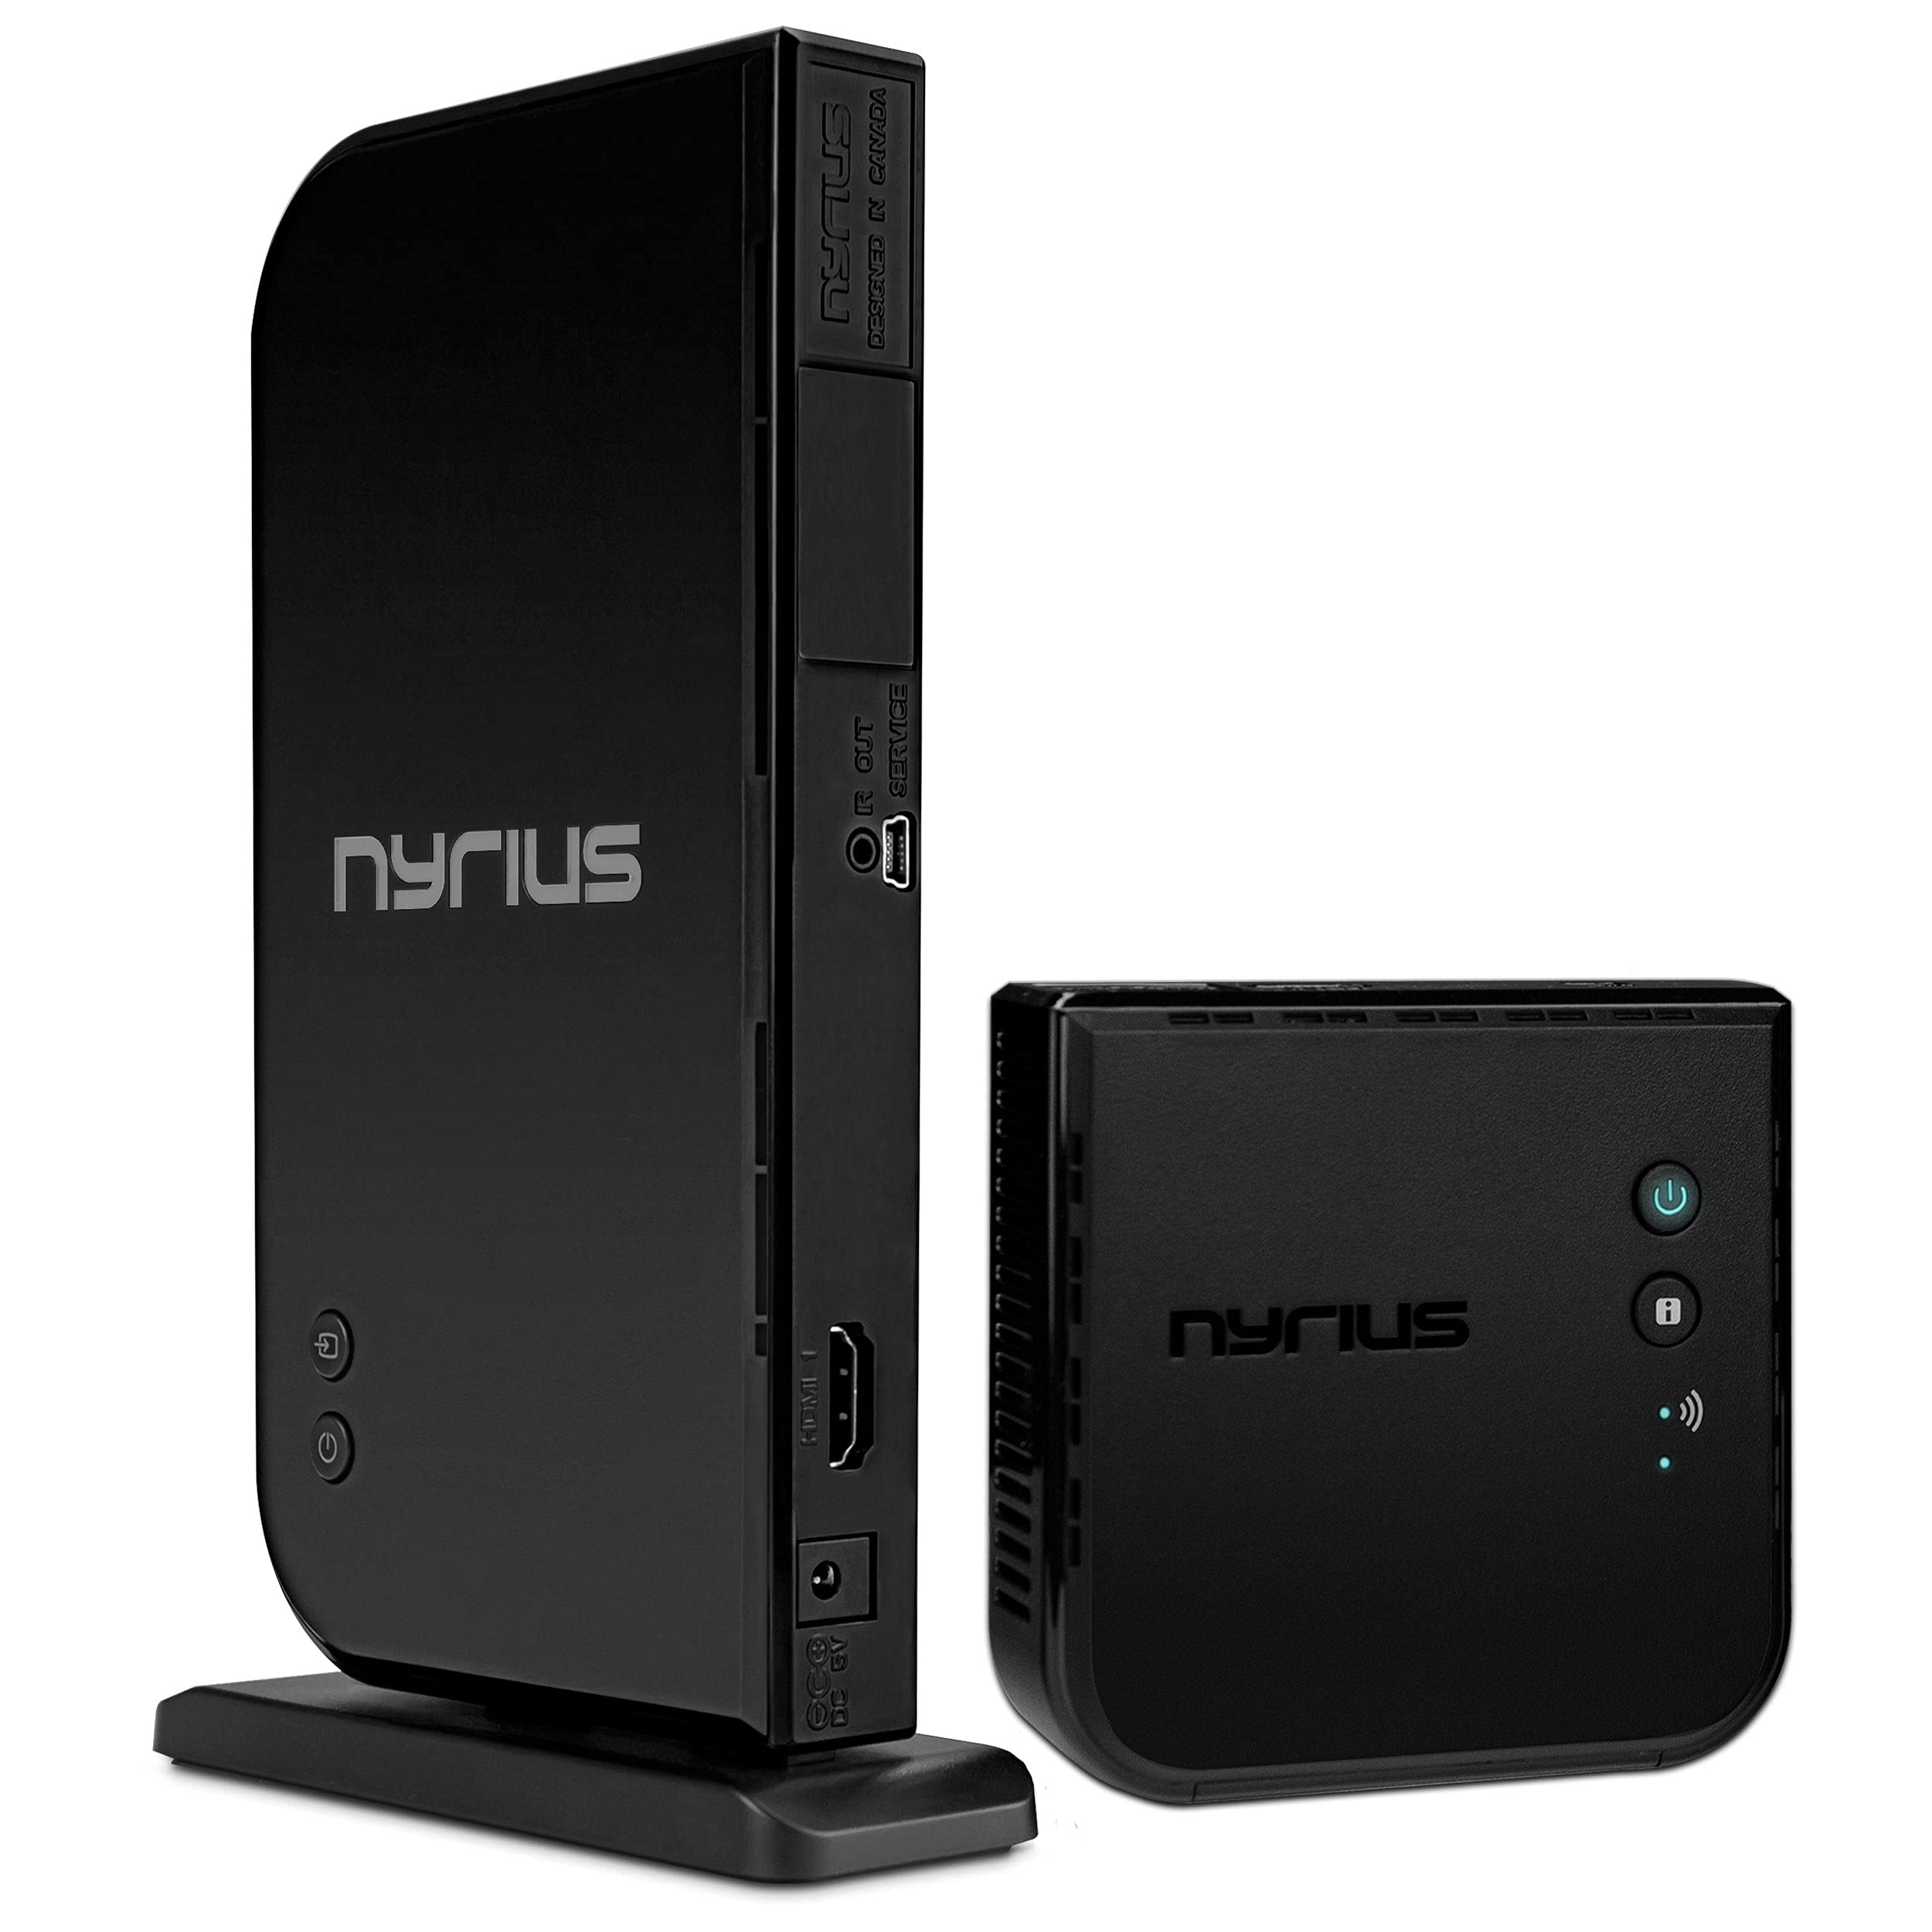  Nyrius Aries ホーム HDMI デジタル ワイヤレス トランスミッター & レシーバー HD 1080p ビデオ ストリーミング、ケーブル ボックス、衛星、ブルーレイ、D...